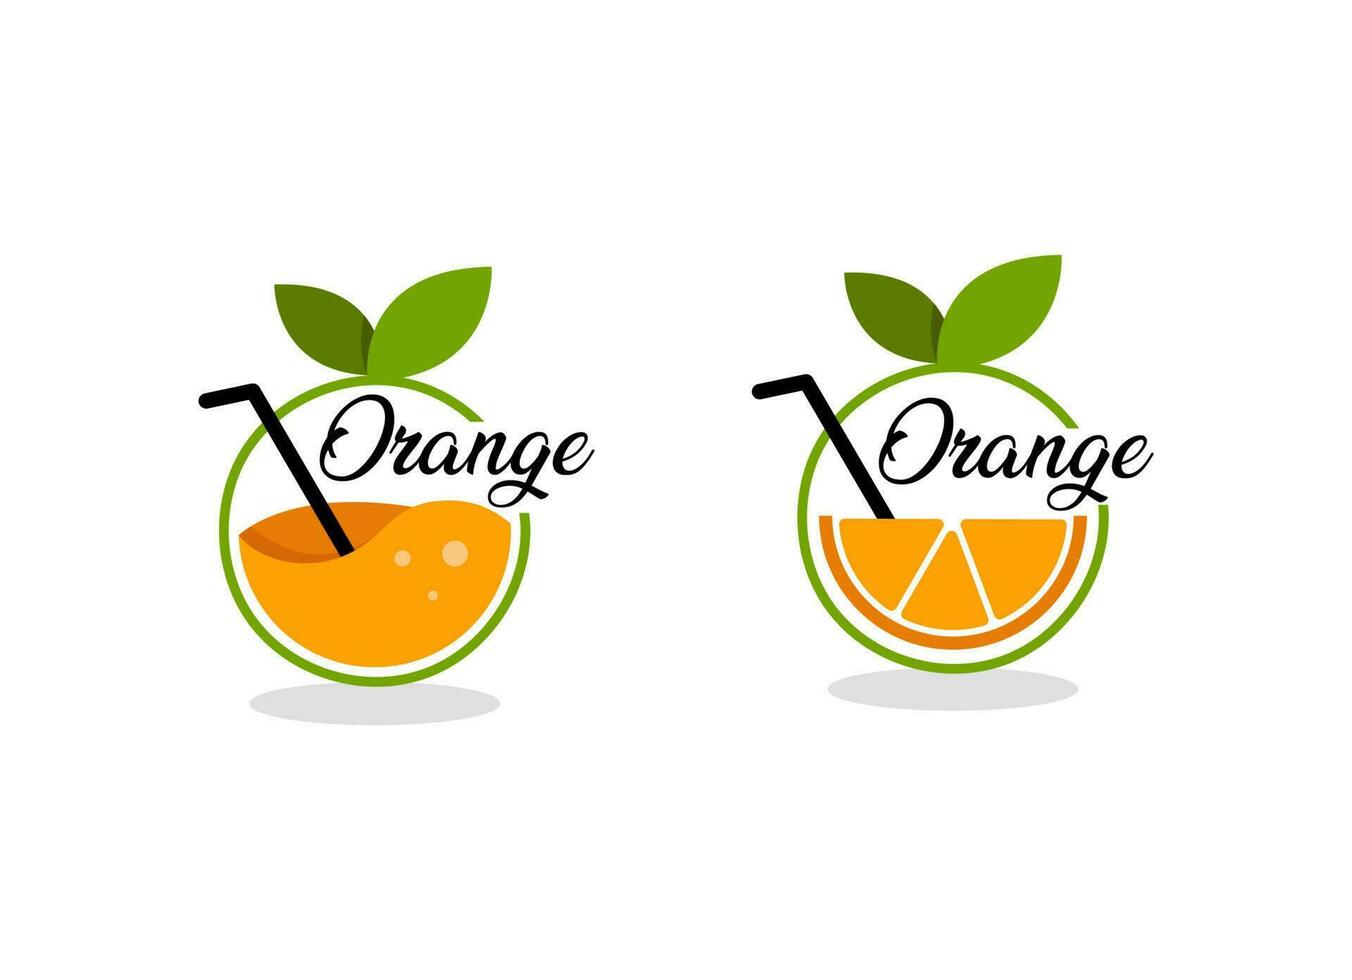 The logo of orange juice vector